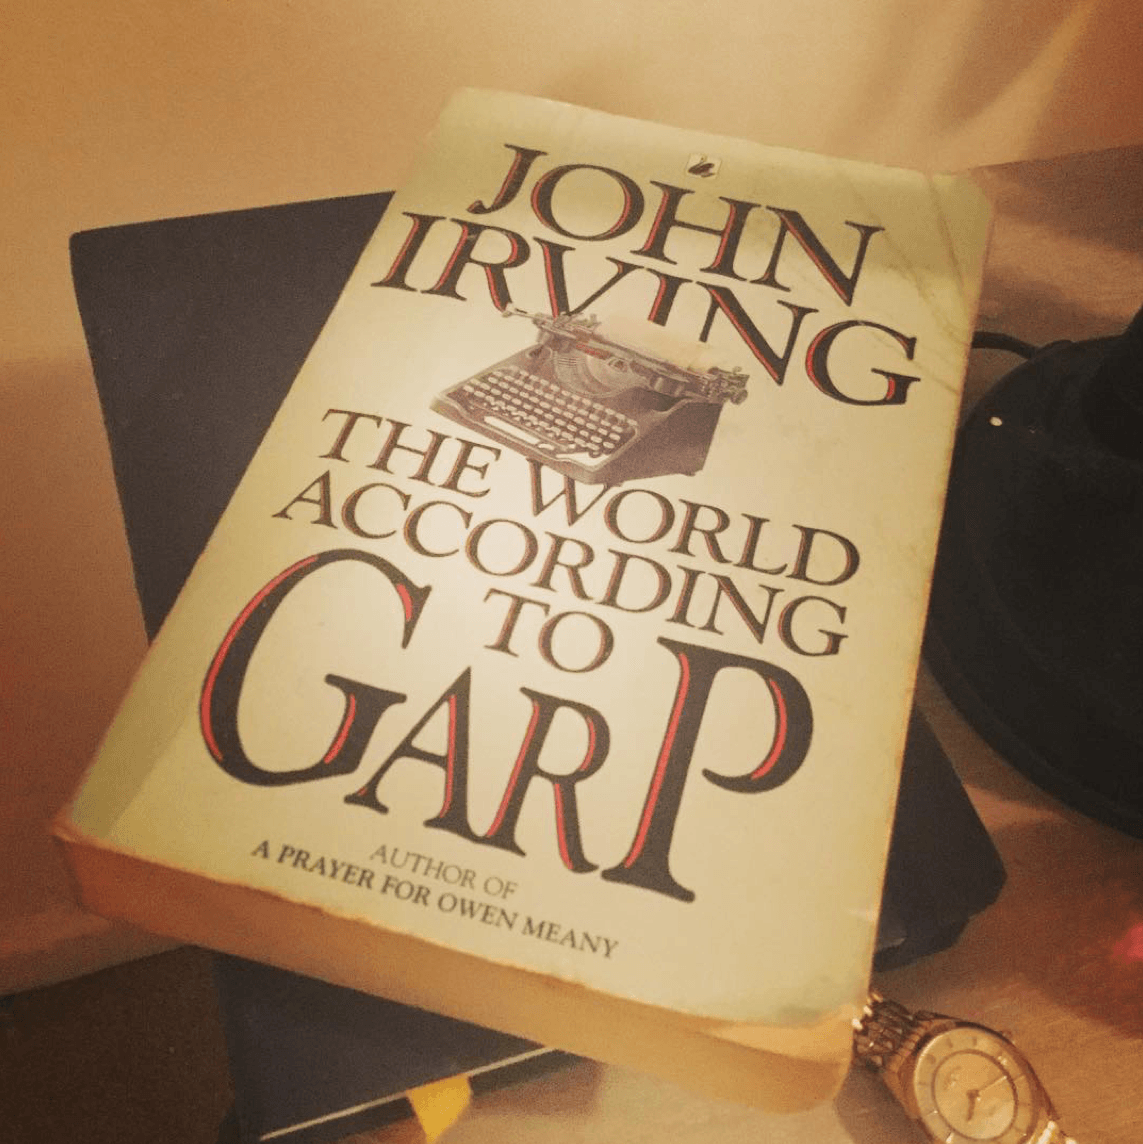 The World according to garp, John irving